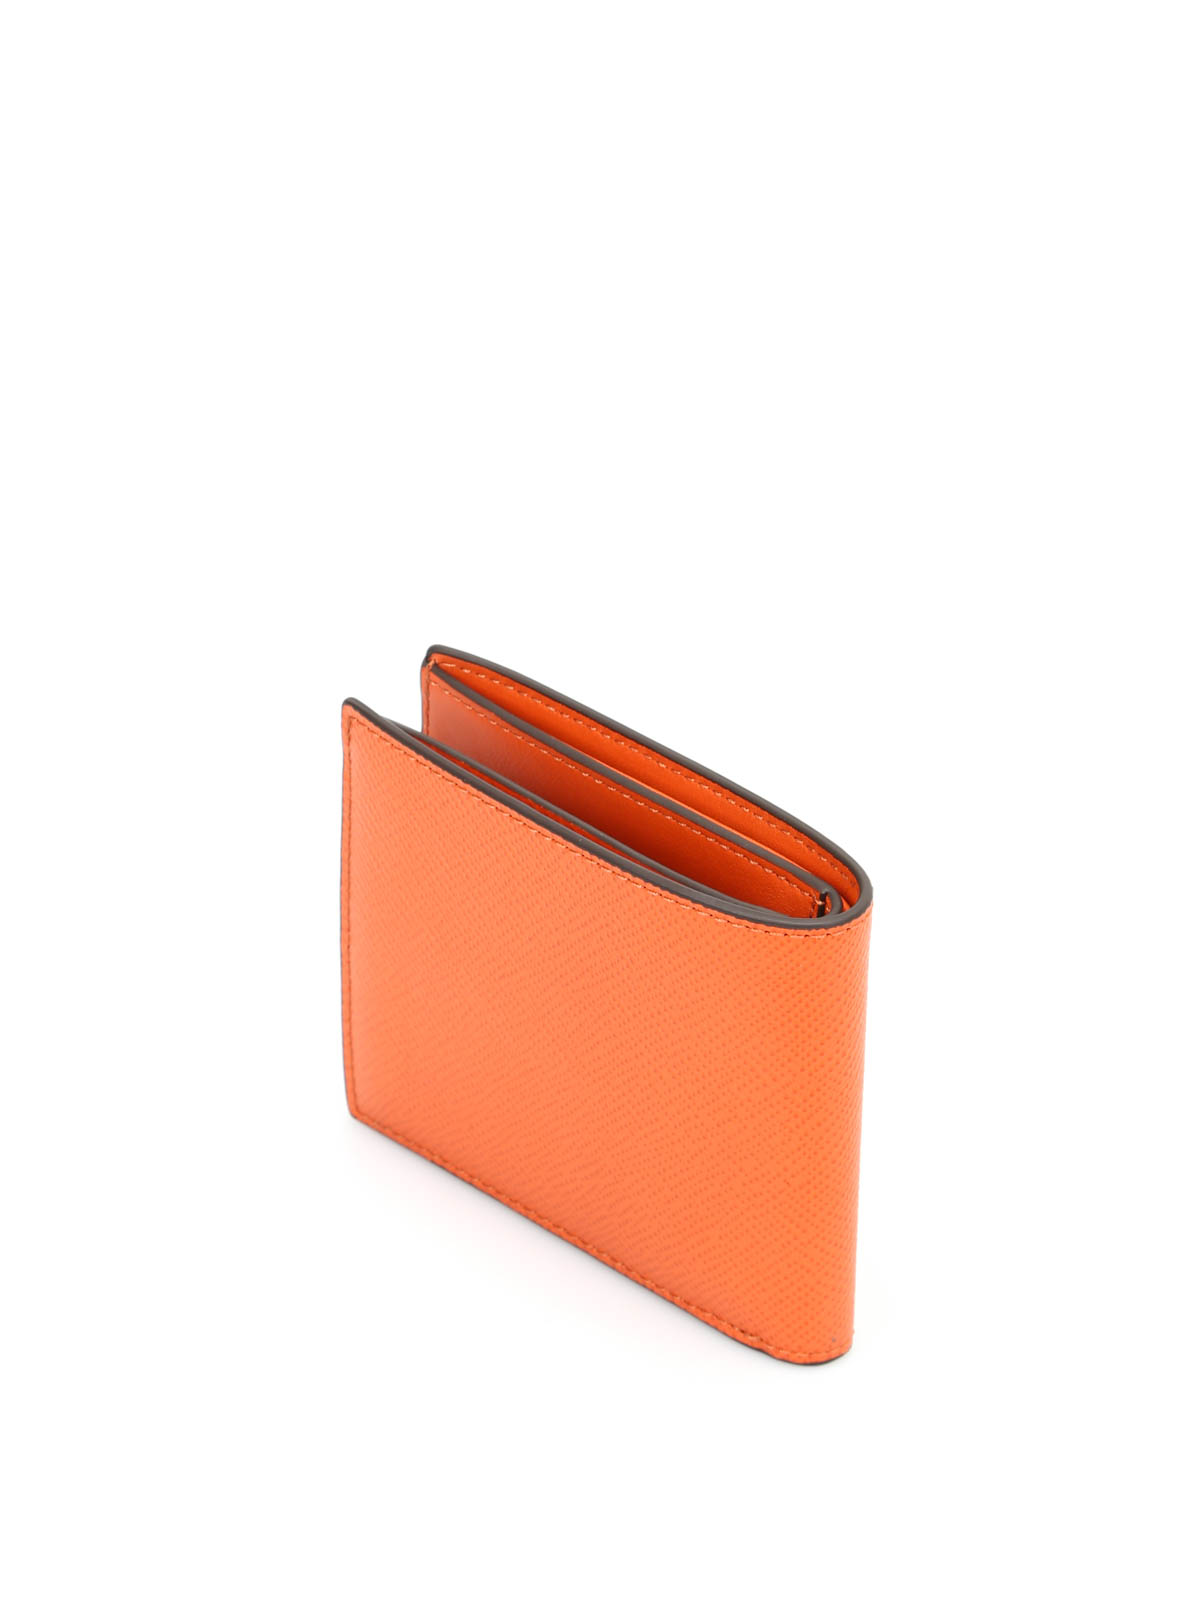 Wallets & purses Michael Kors - Saffiano bi-fold wallet - 39F5LHRF1LPOPPY